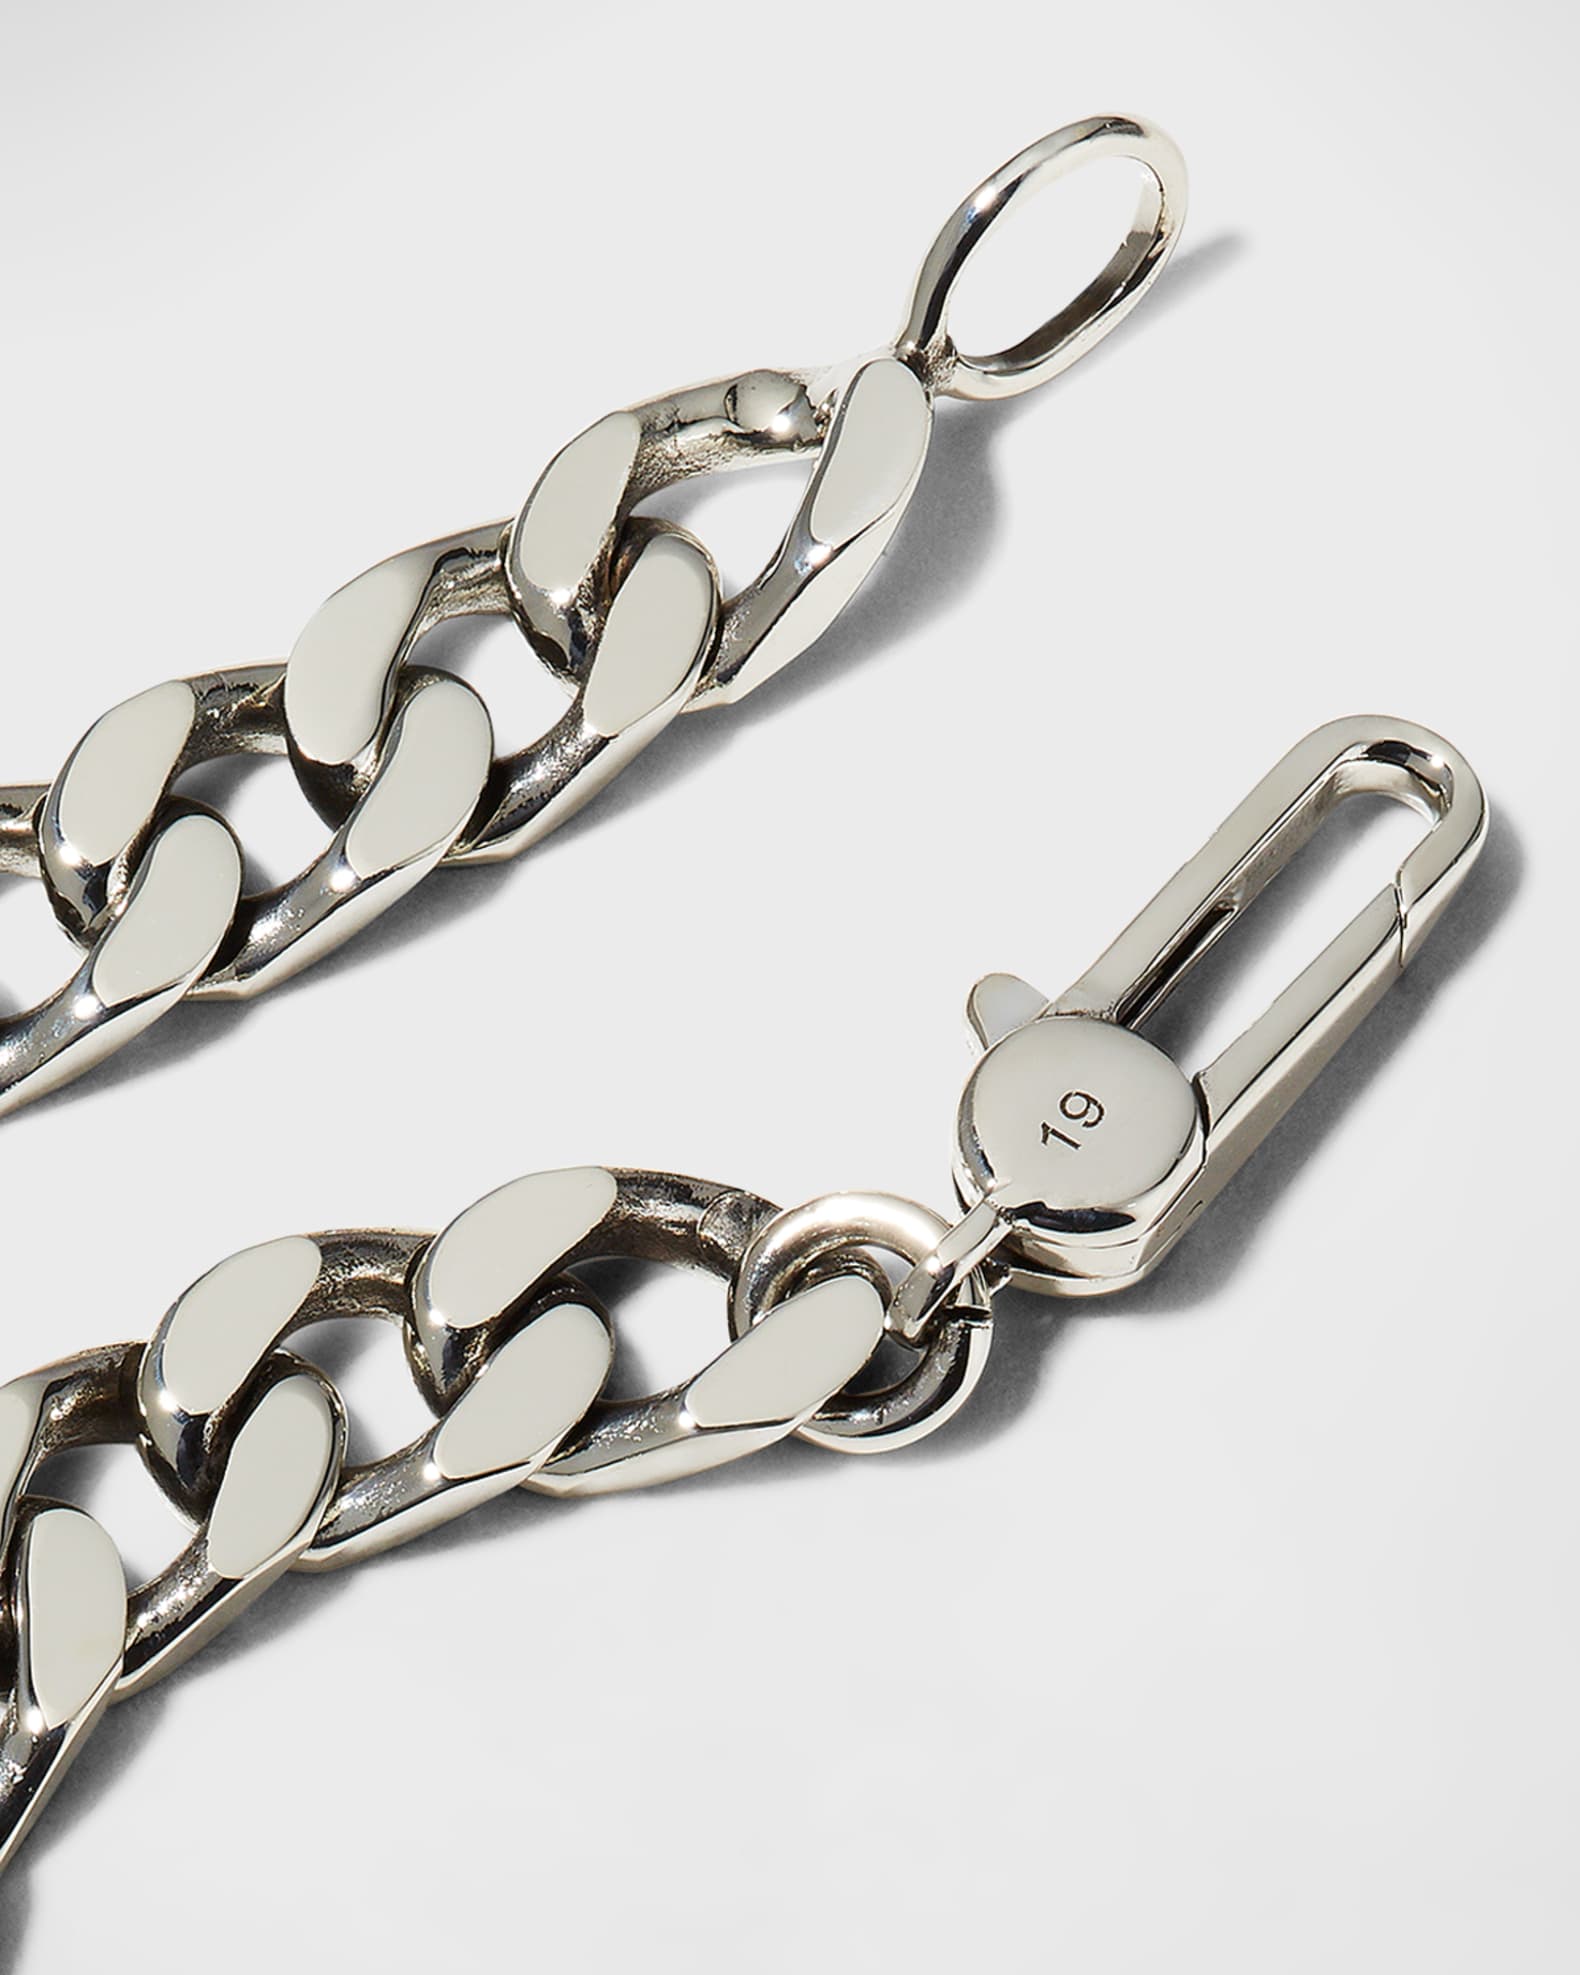 Gucci Men's Sterling Silver Diamond Pattern Bracelet YBA295676001021 -  Macy's